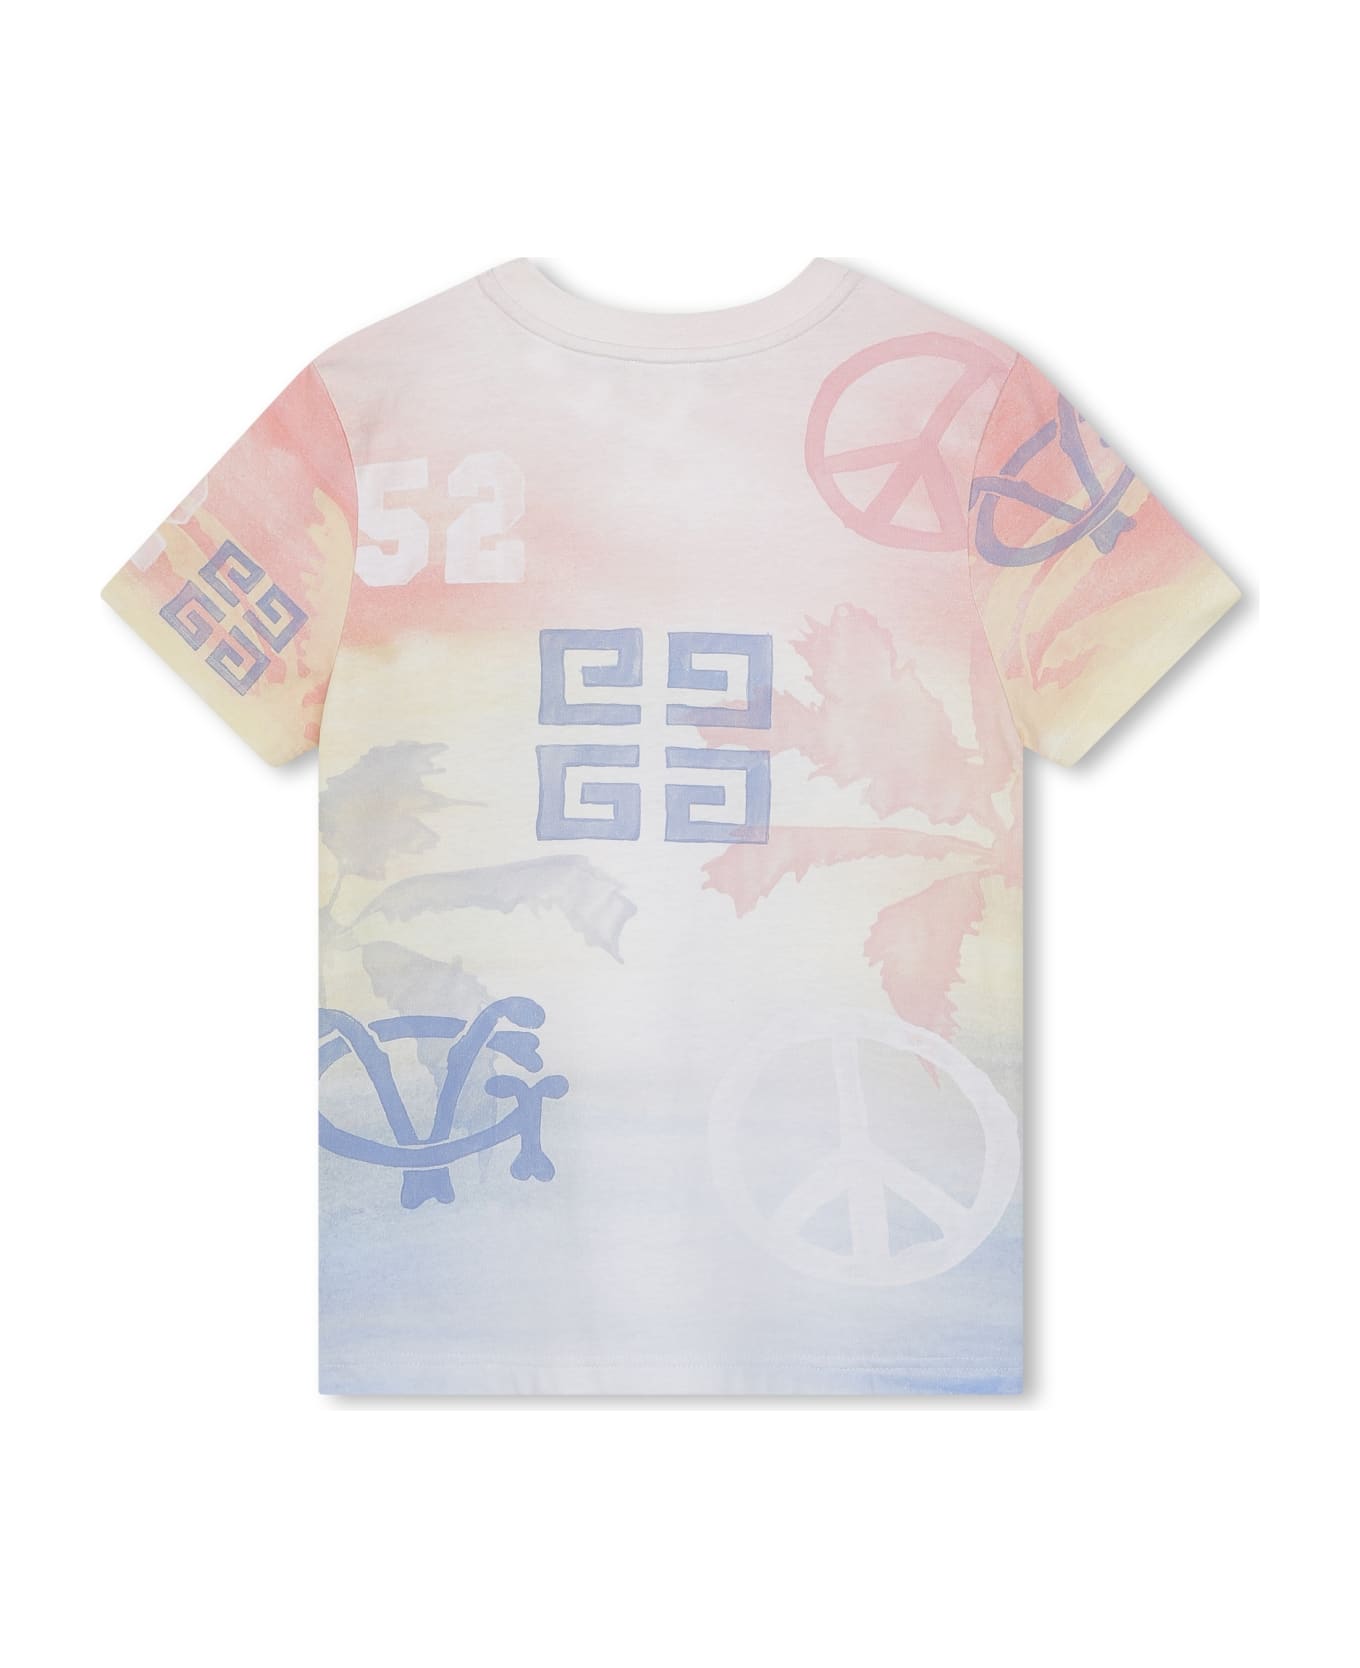 Givenchy T-shirt Con Logo - Multicolore